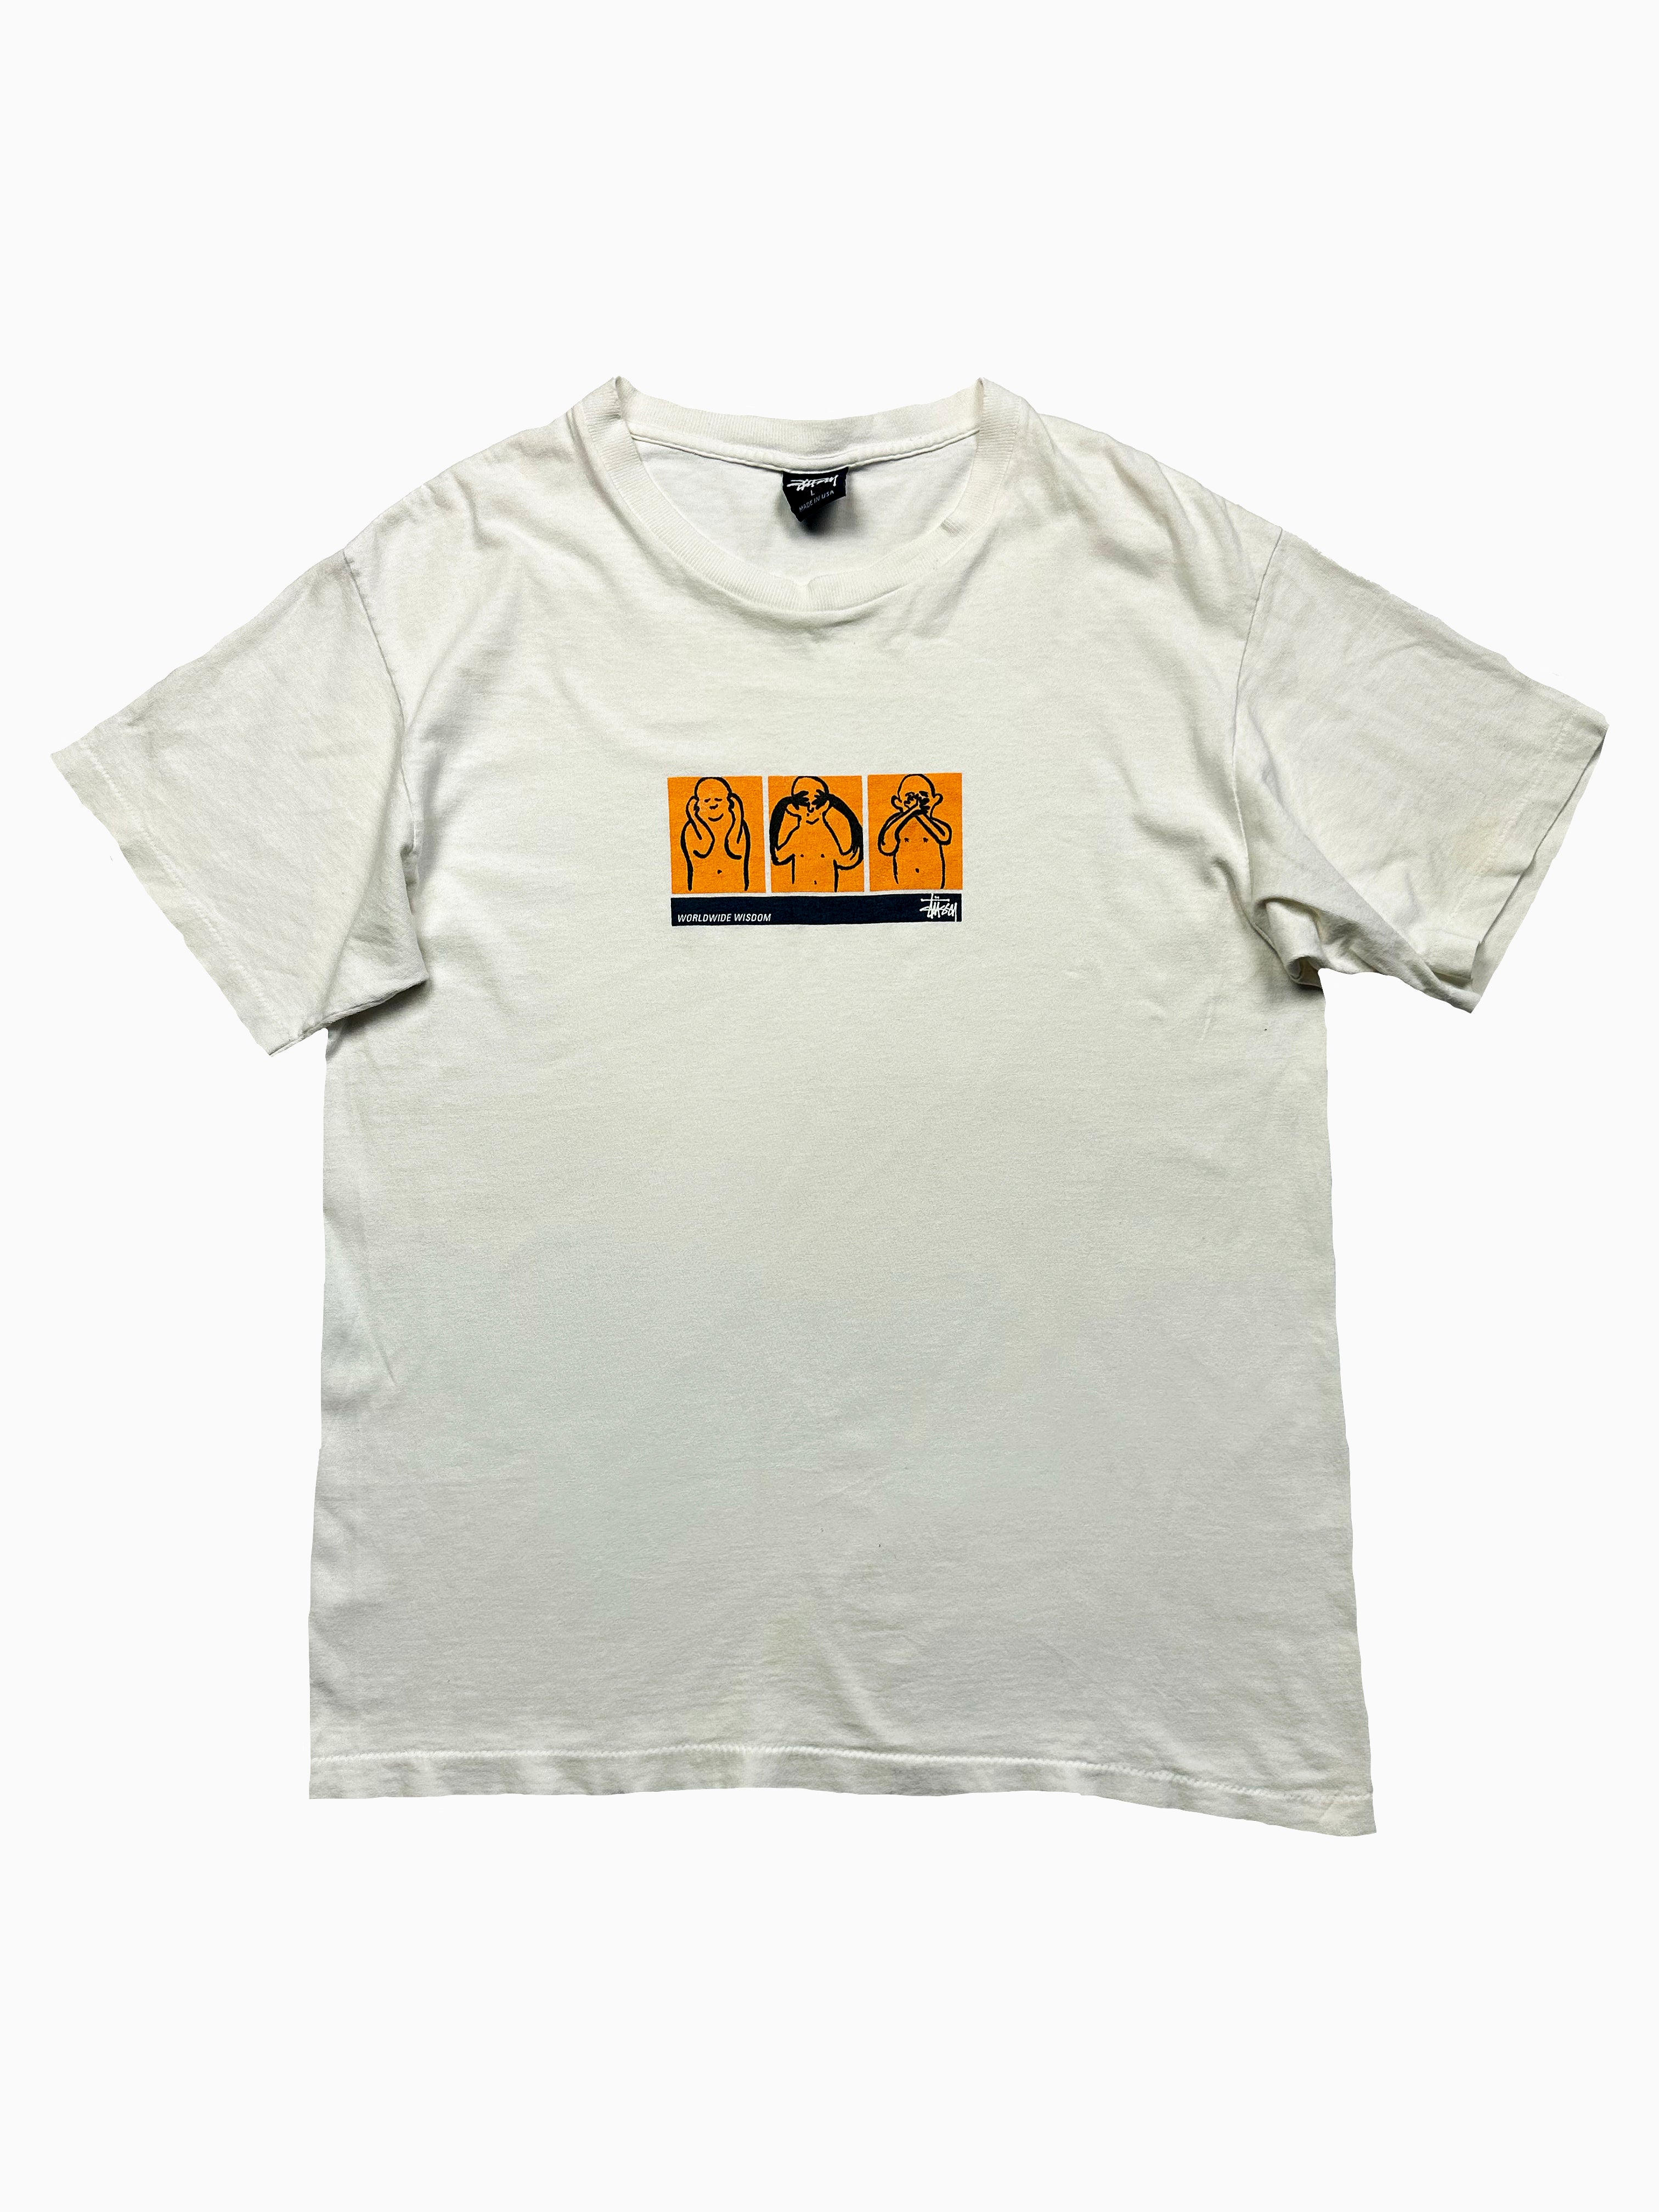 Stussy 'World Wide Wisdom' T-shirt 90's